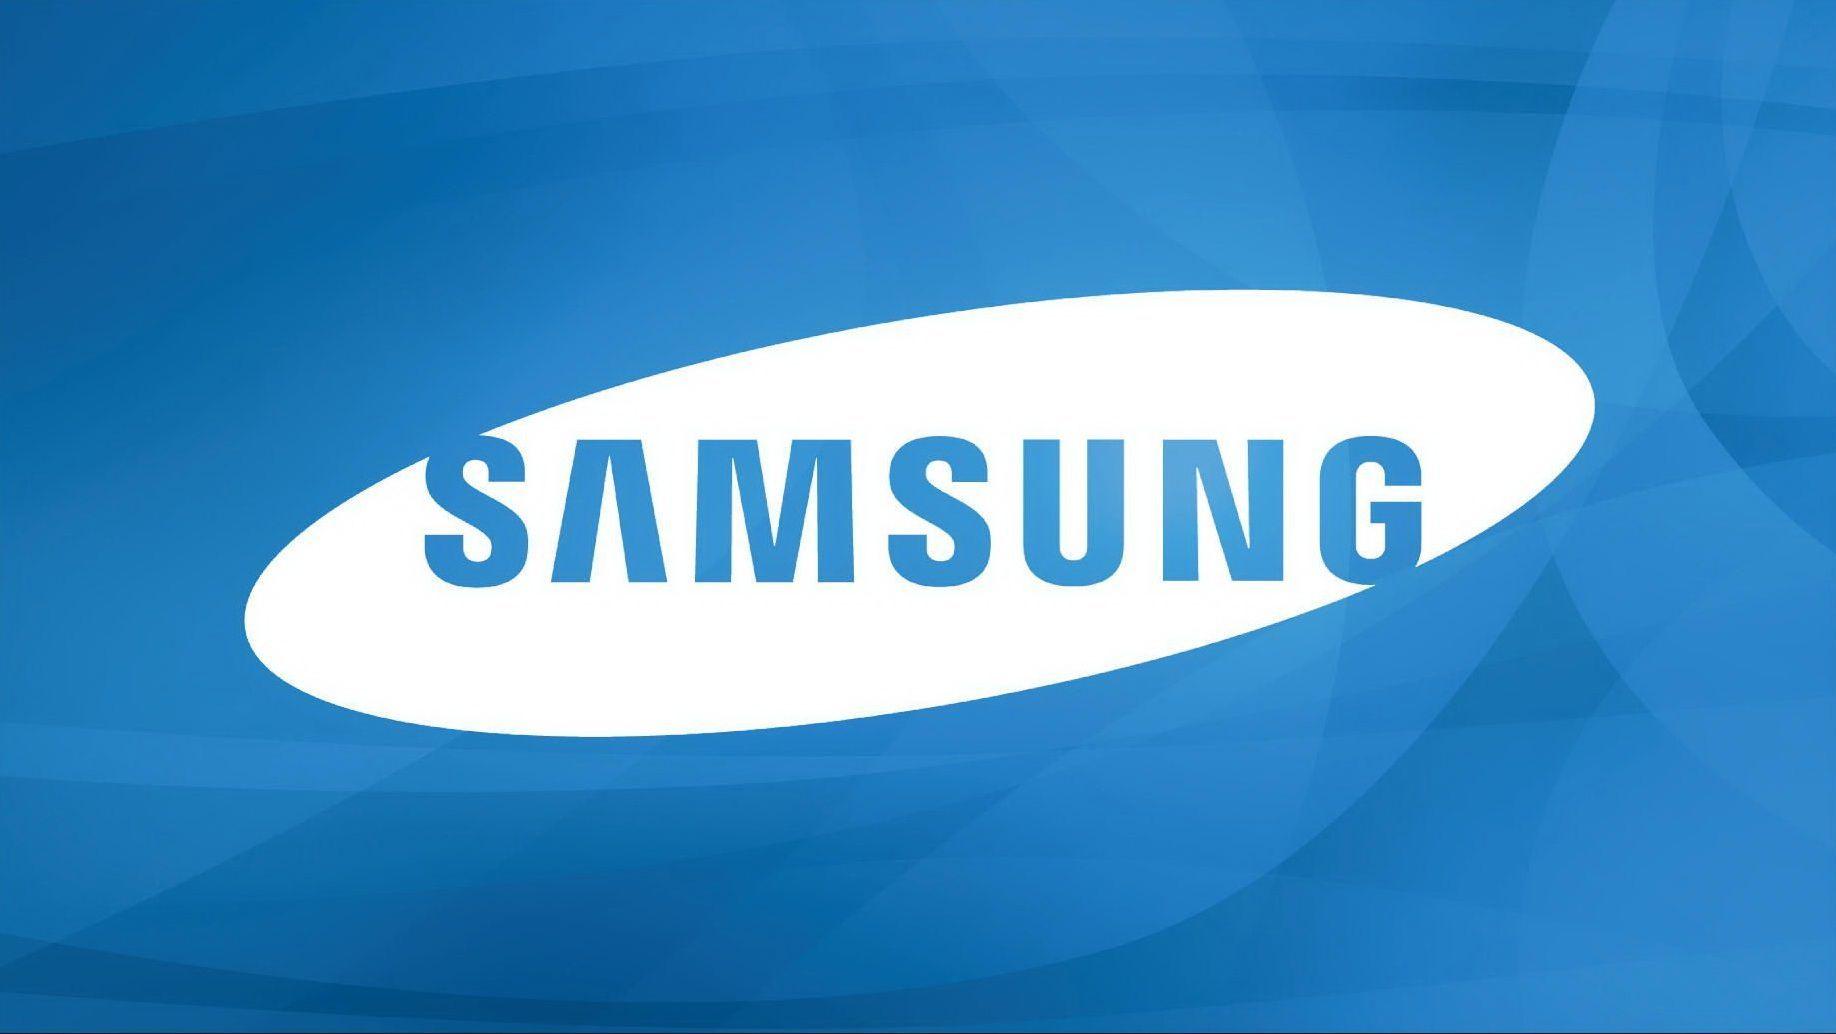 Samsung TV Logo - Samsung LED TV Logo Wallpapers - Wallpaper Cave